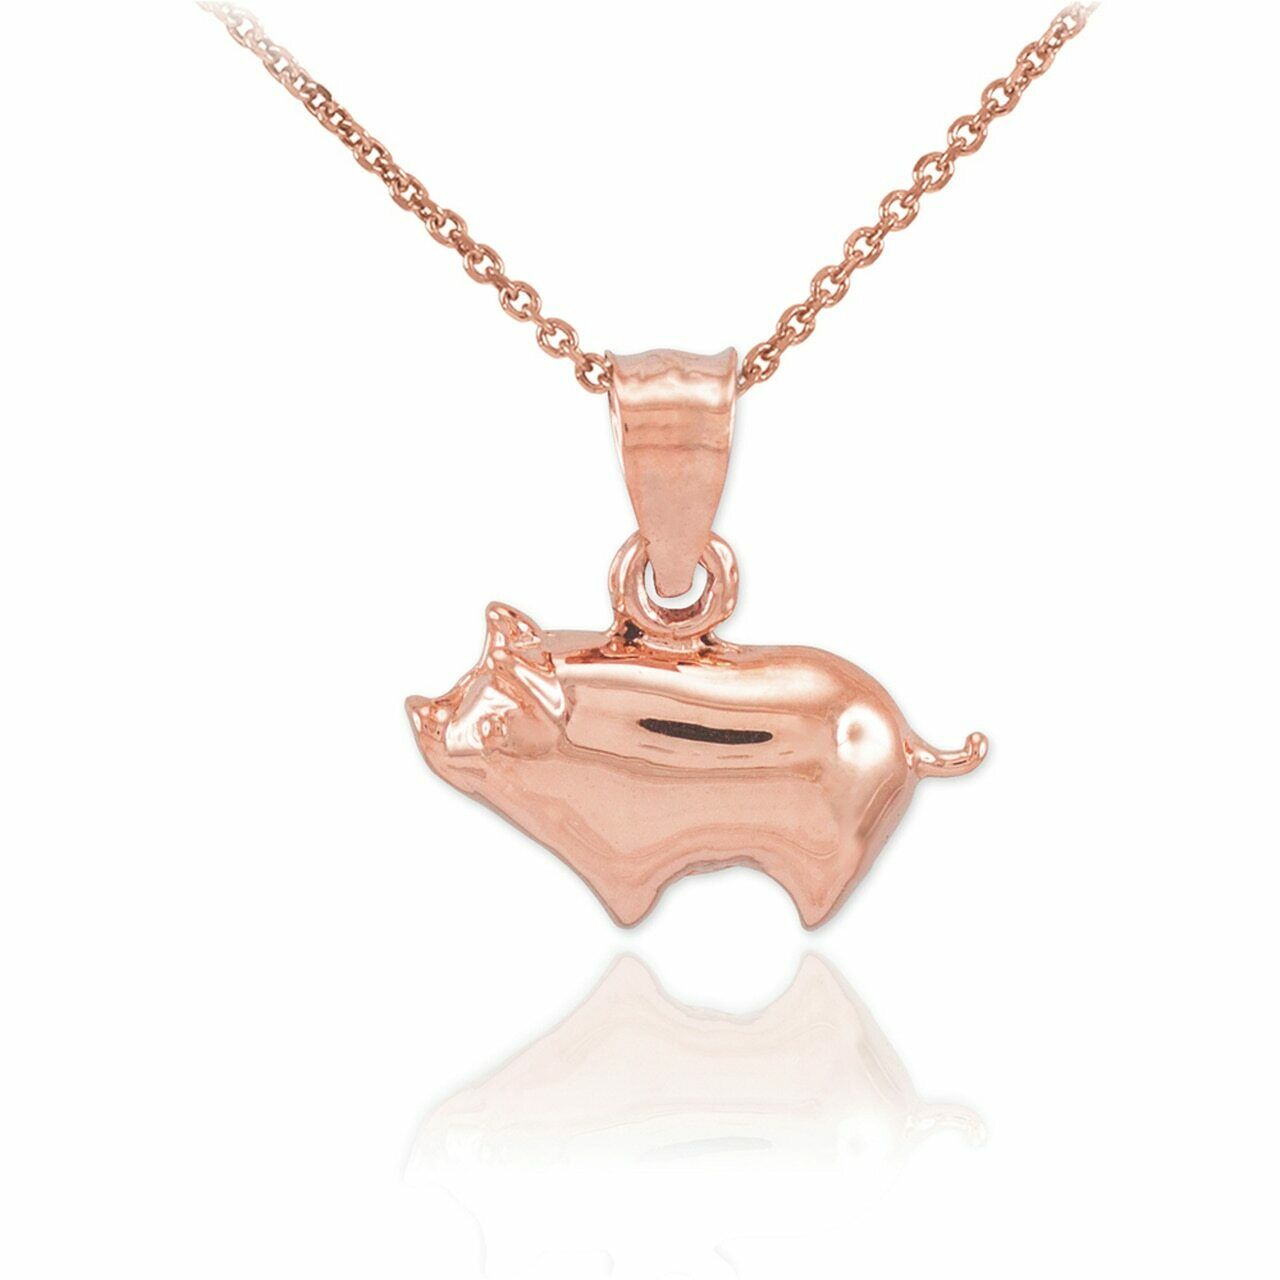 10K Solid Rose Gold Pig Charm Pendant Necklace 16" 18" 20" 22"